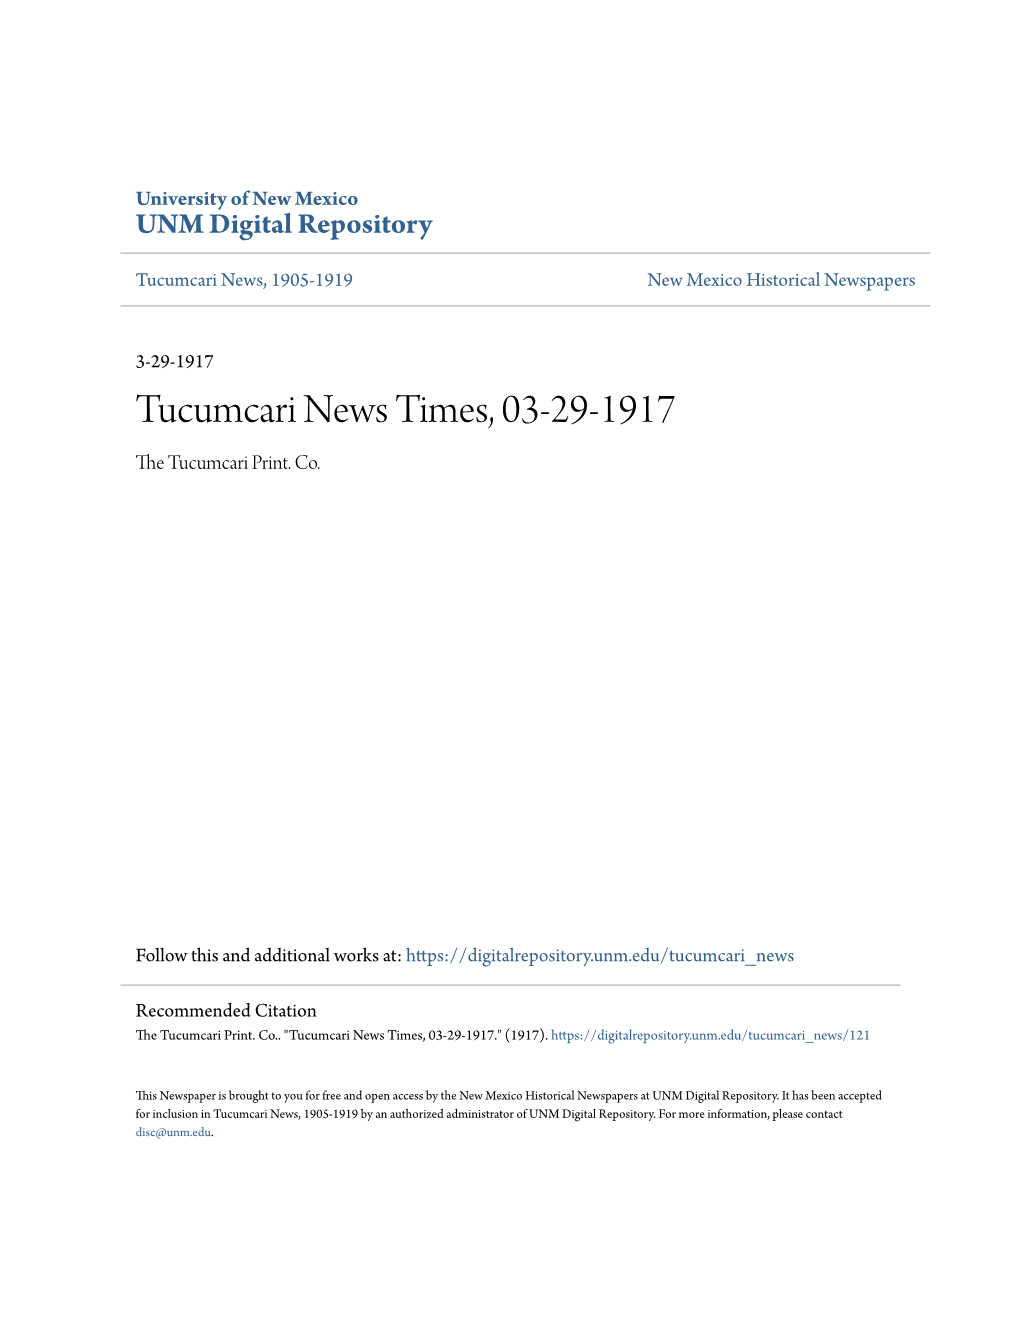 Tucumcari News Times, 03-29-1917 the Uct Umcari Print